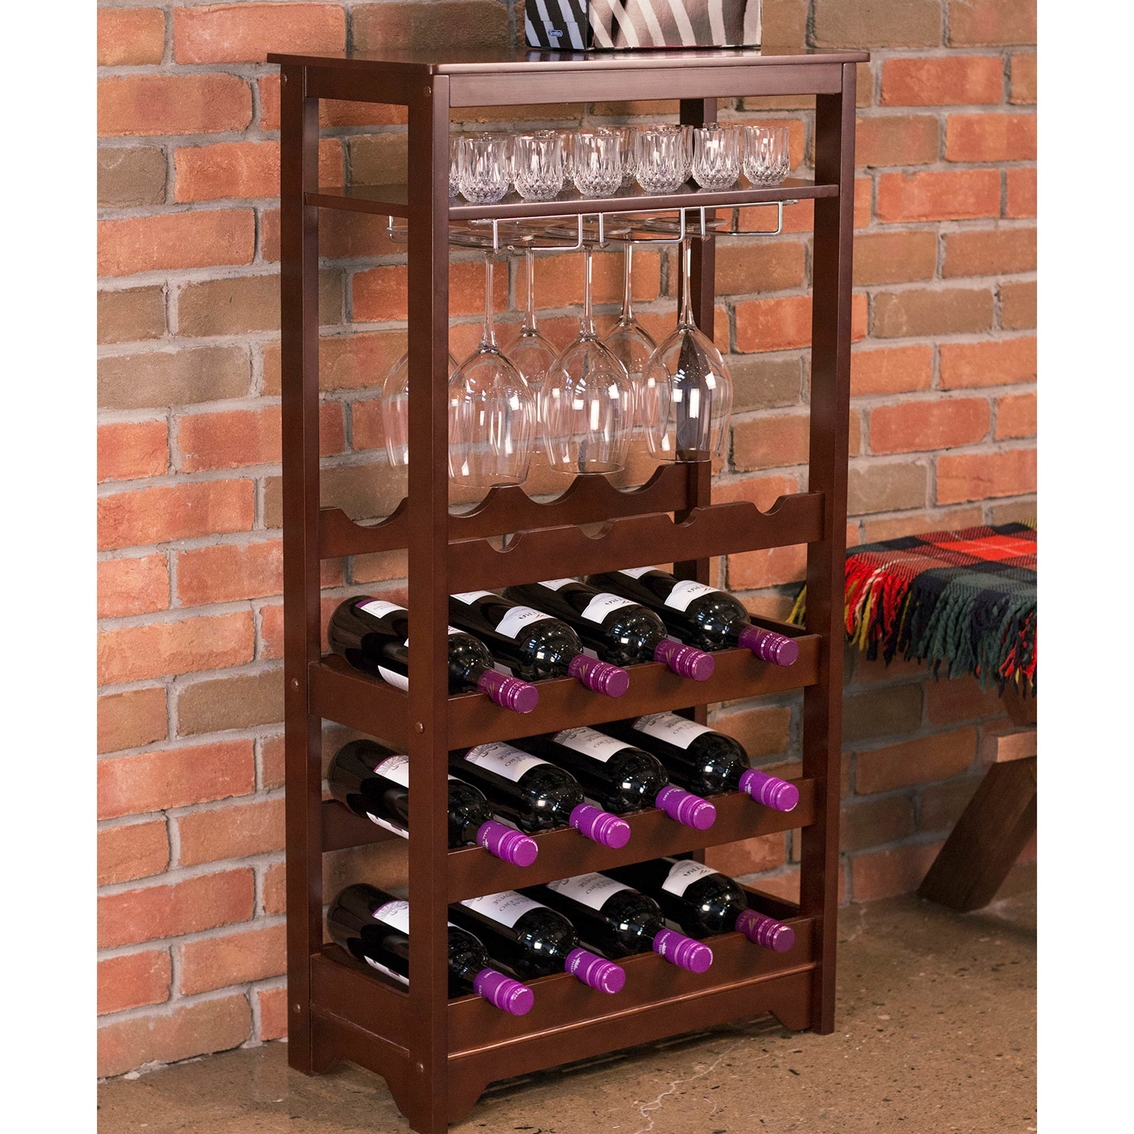 Northbeam Wine Rack - Image 2 of 4